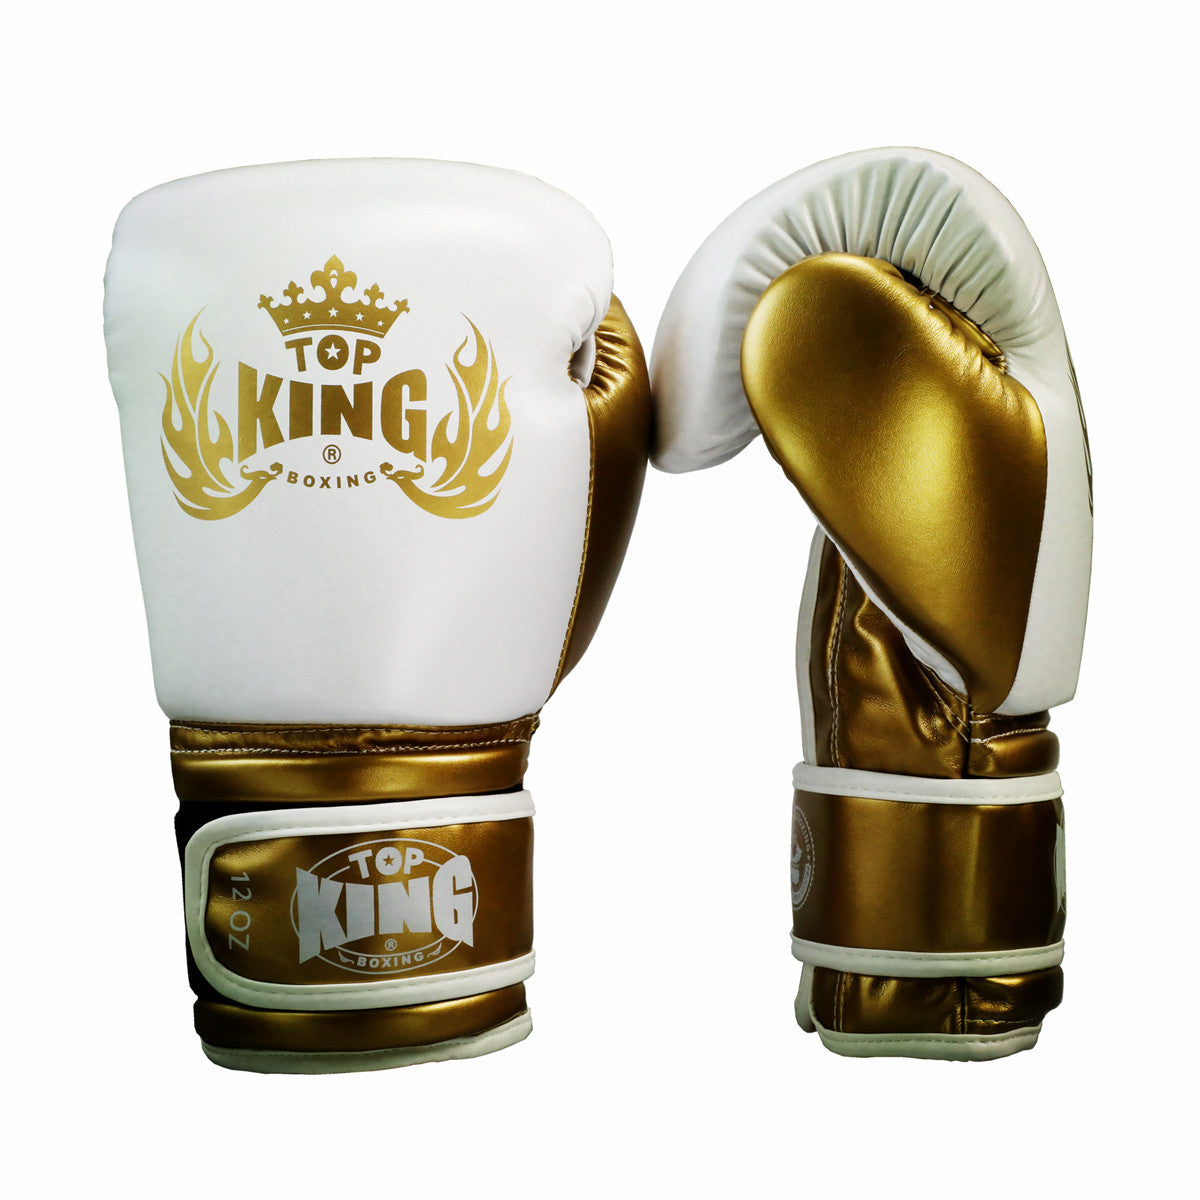 The Sanda Combat training Boxing glove